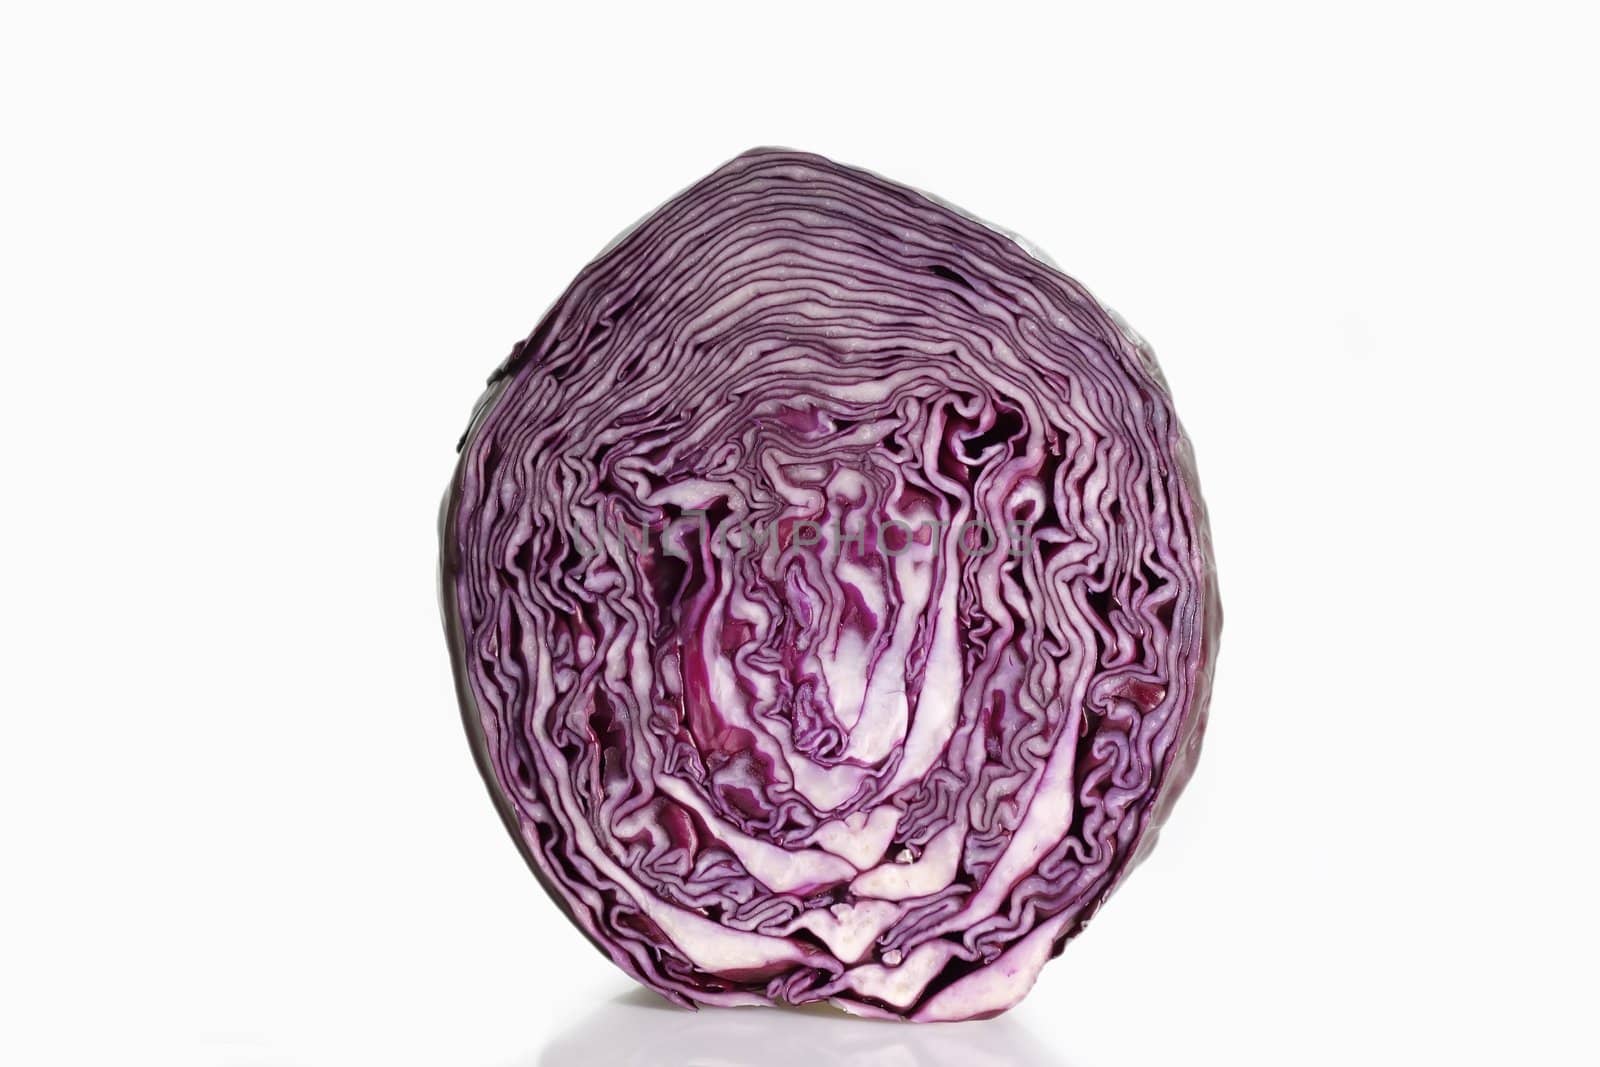 Sliced red cabbage on light background